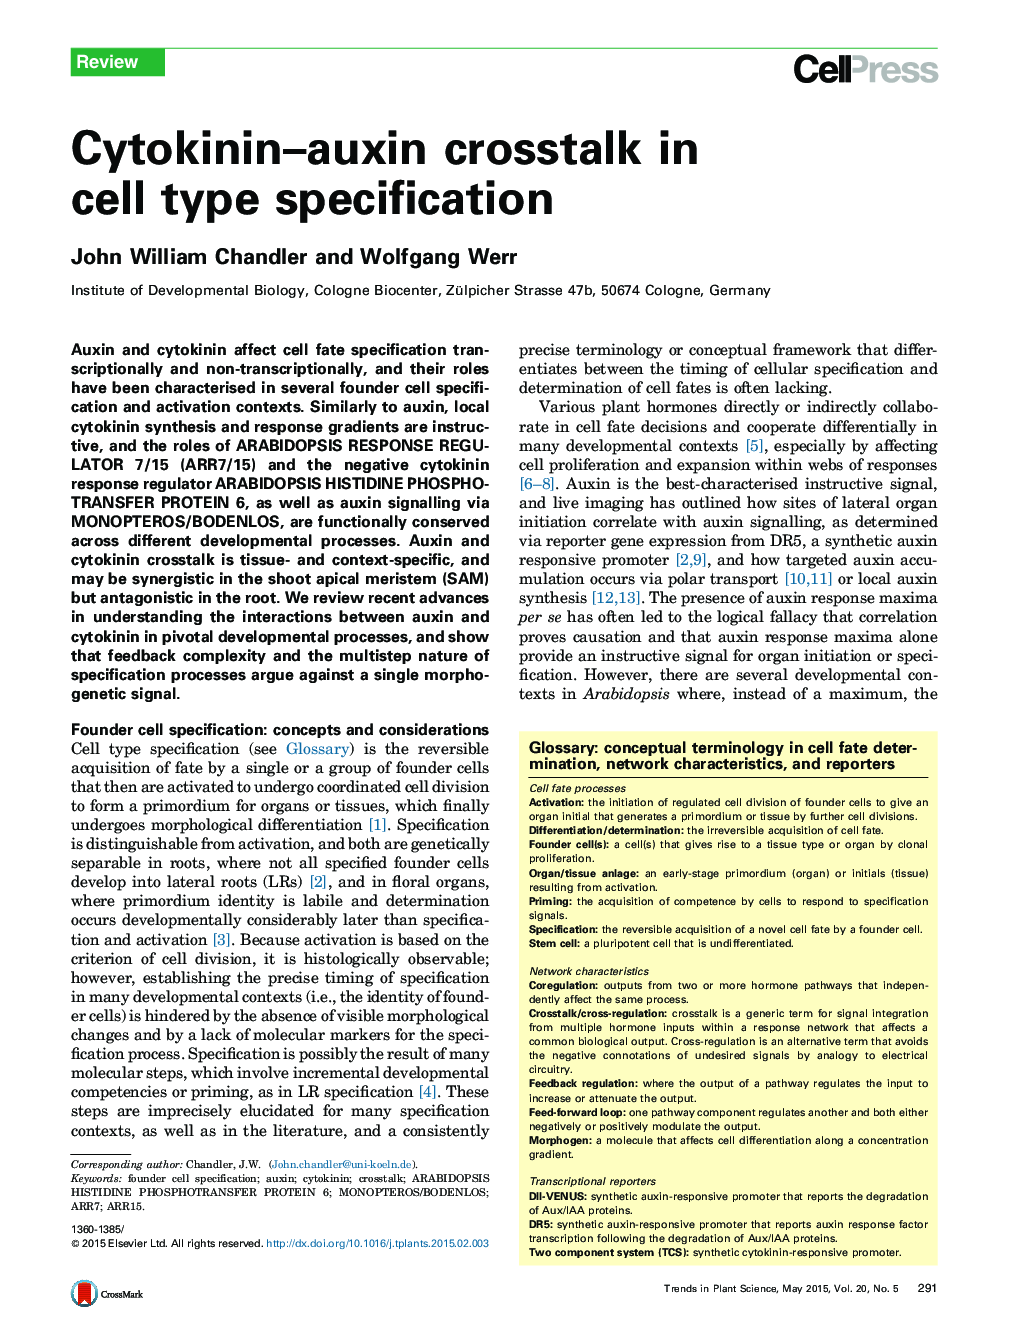 تداخل سیتوکینینا اکسین در مشخصات سلولی 